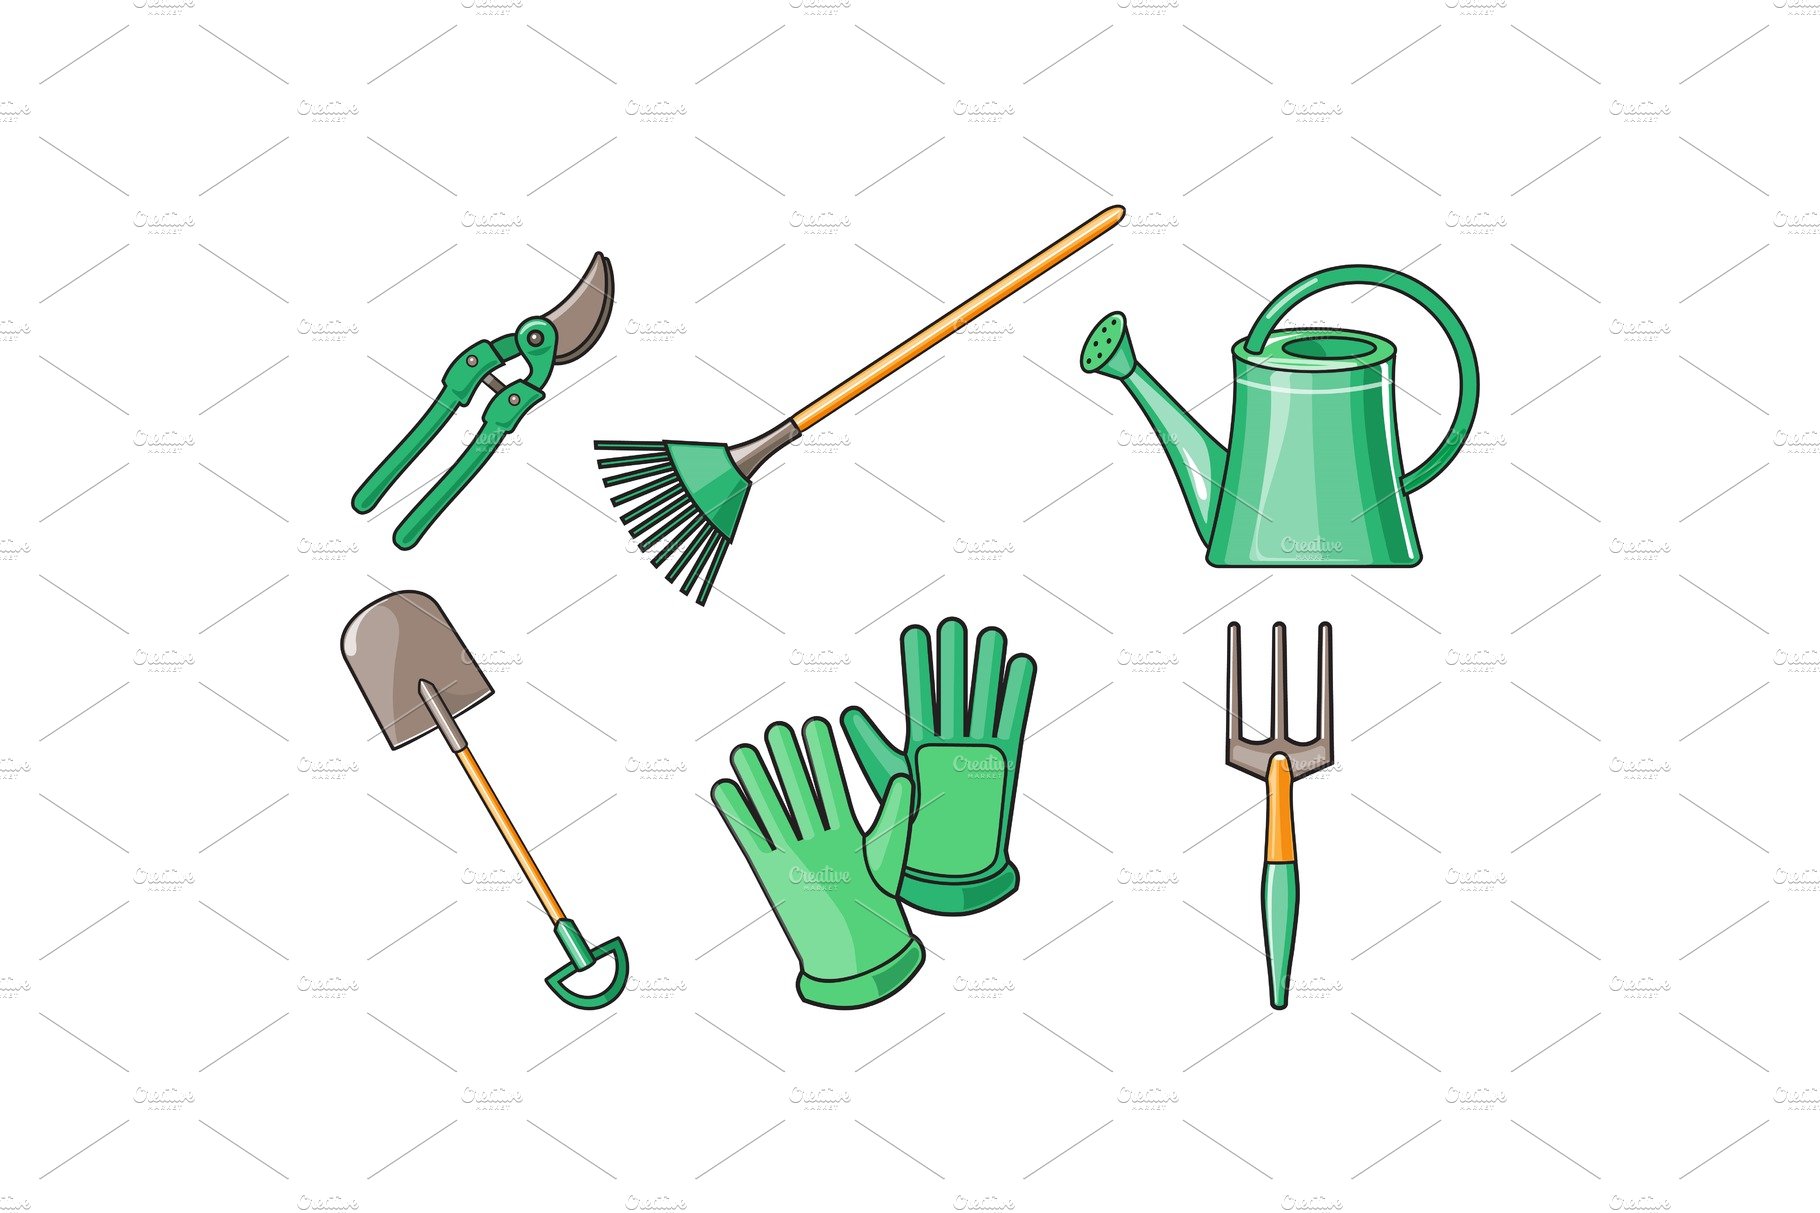 Gardening tools icons set, pruner cover image.